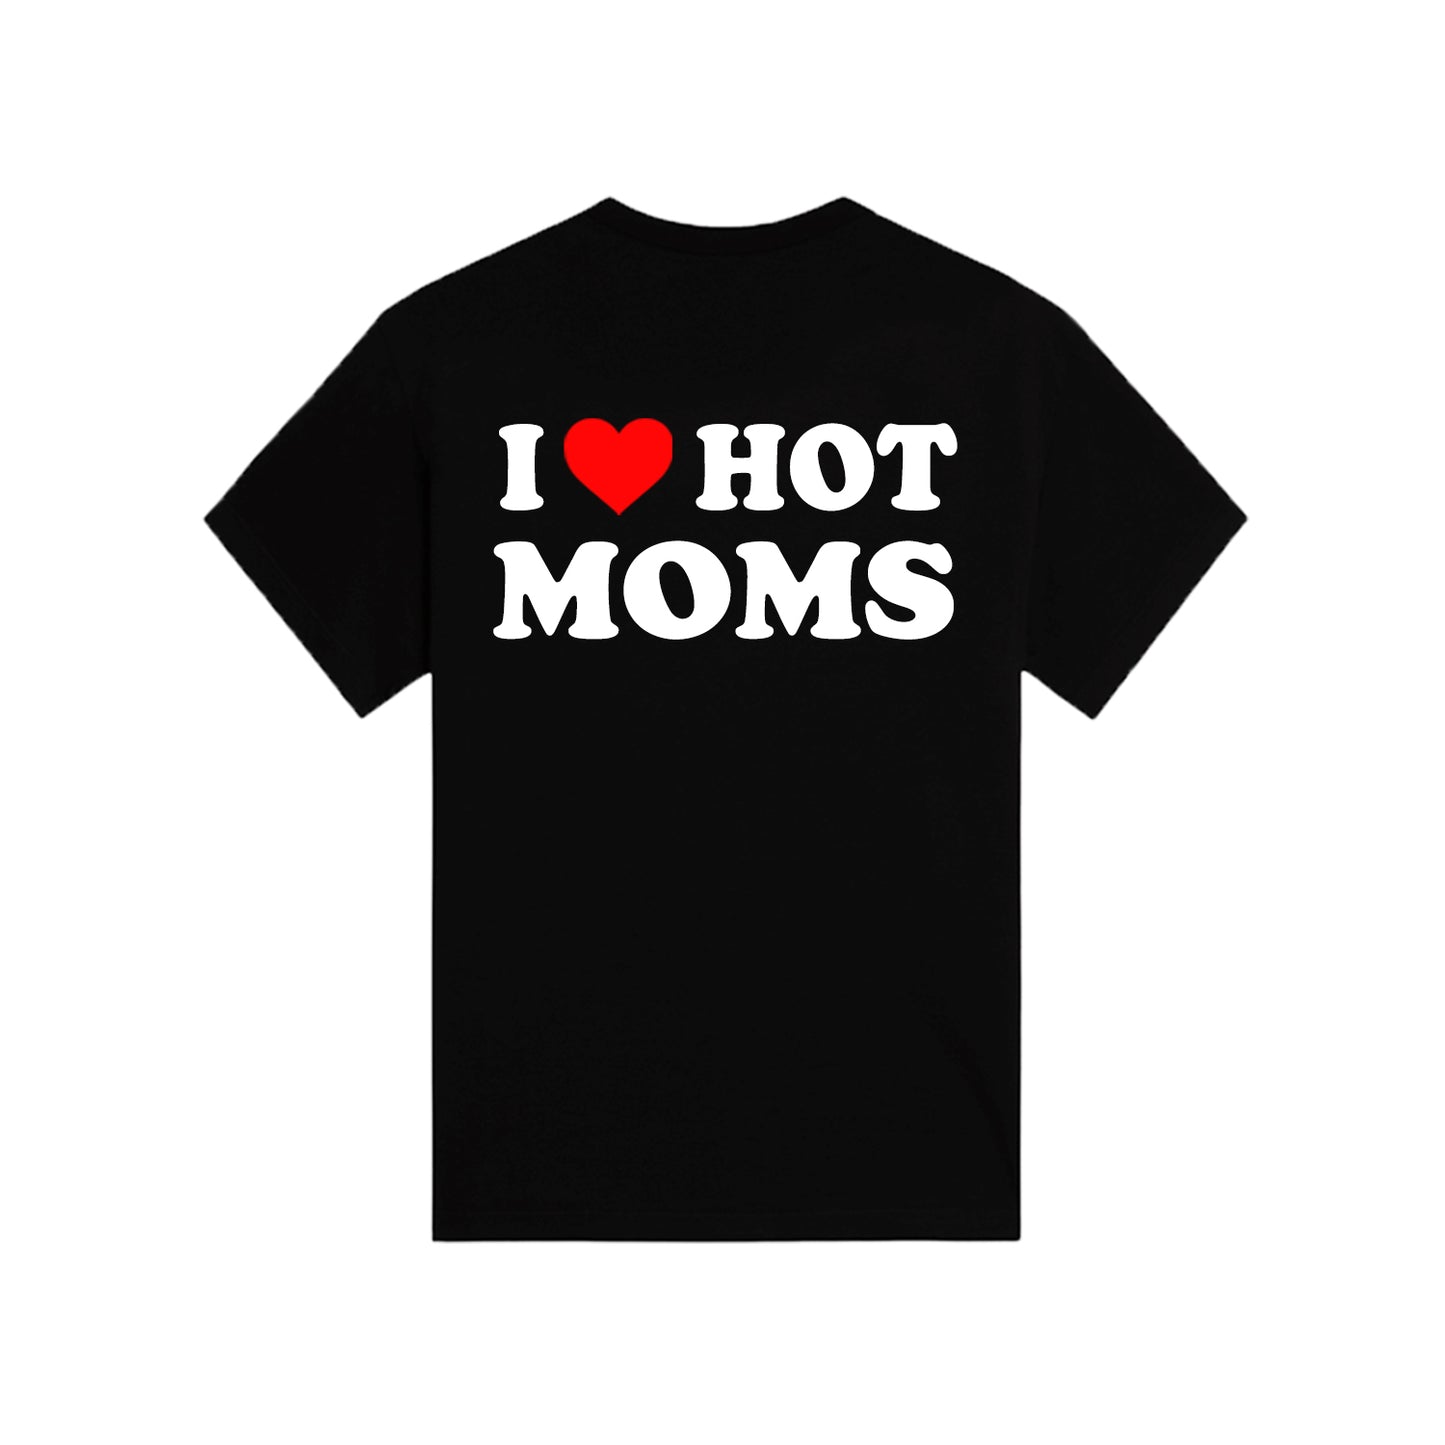 I LOVE HOT MOMS